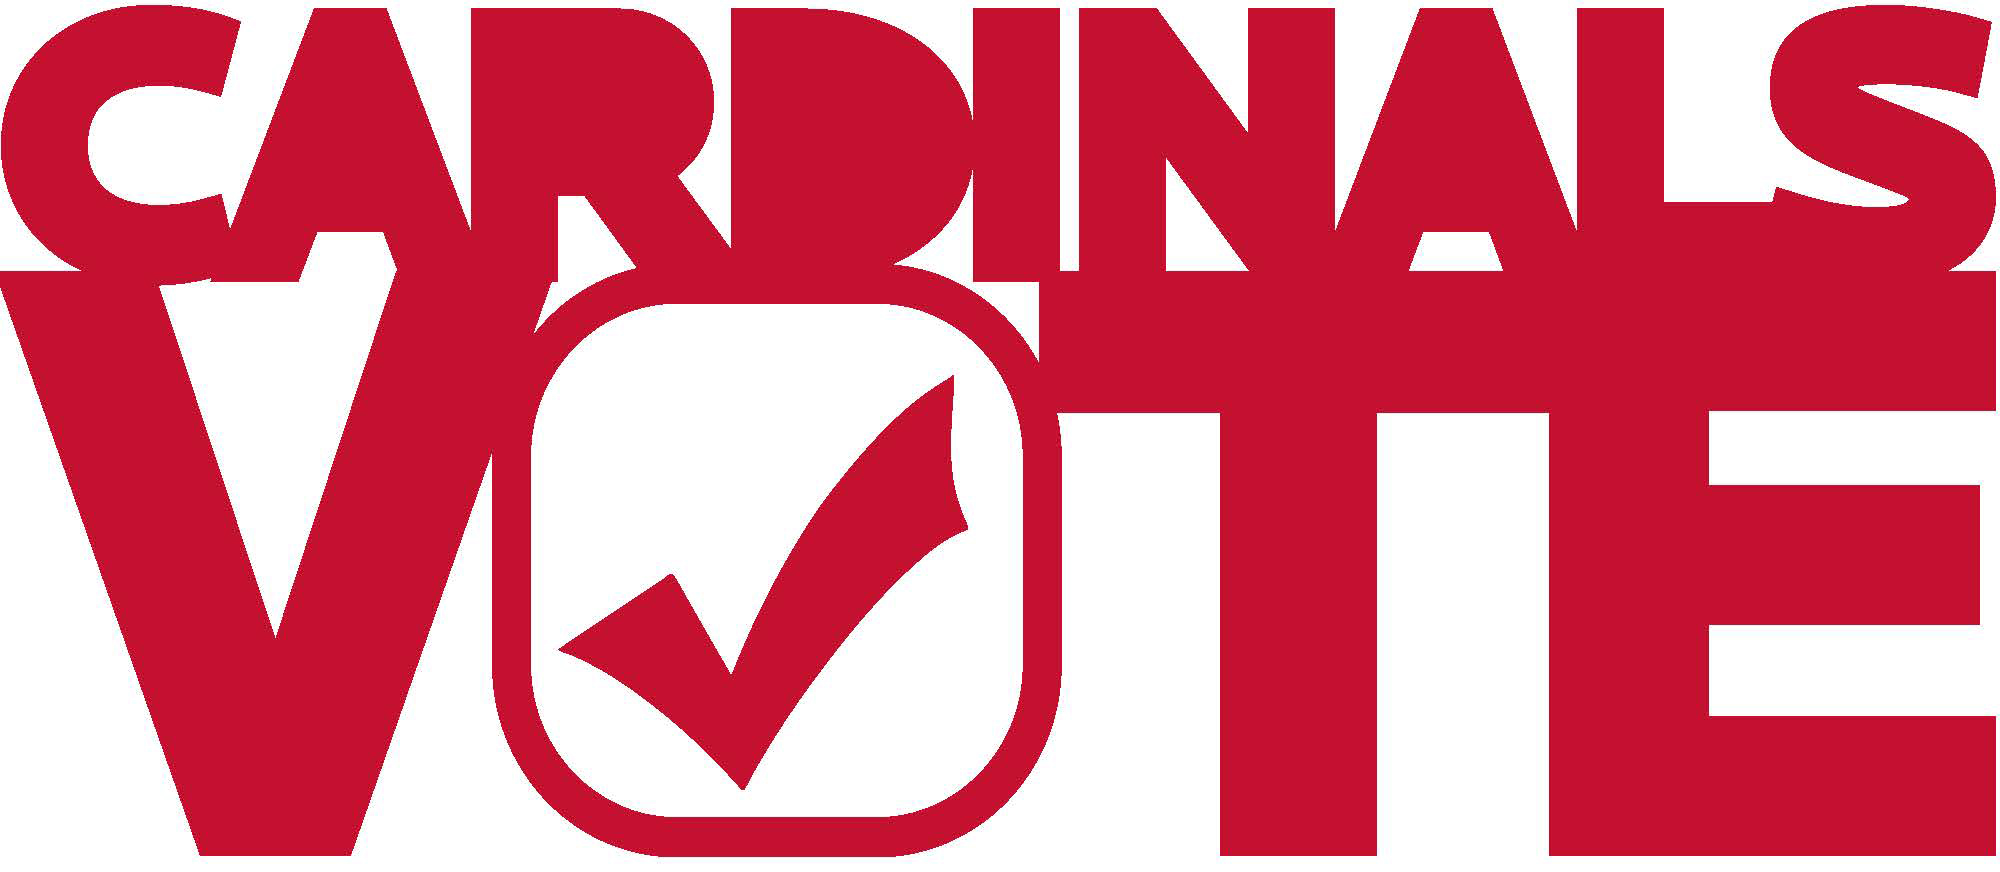 cardinals vote logo